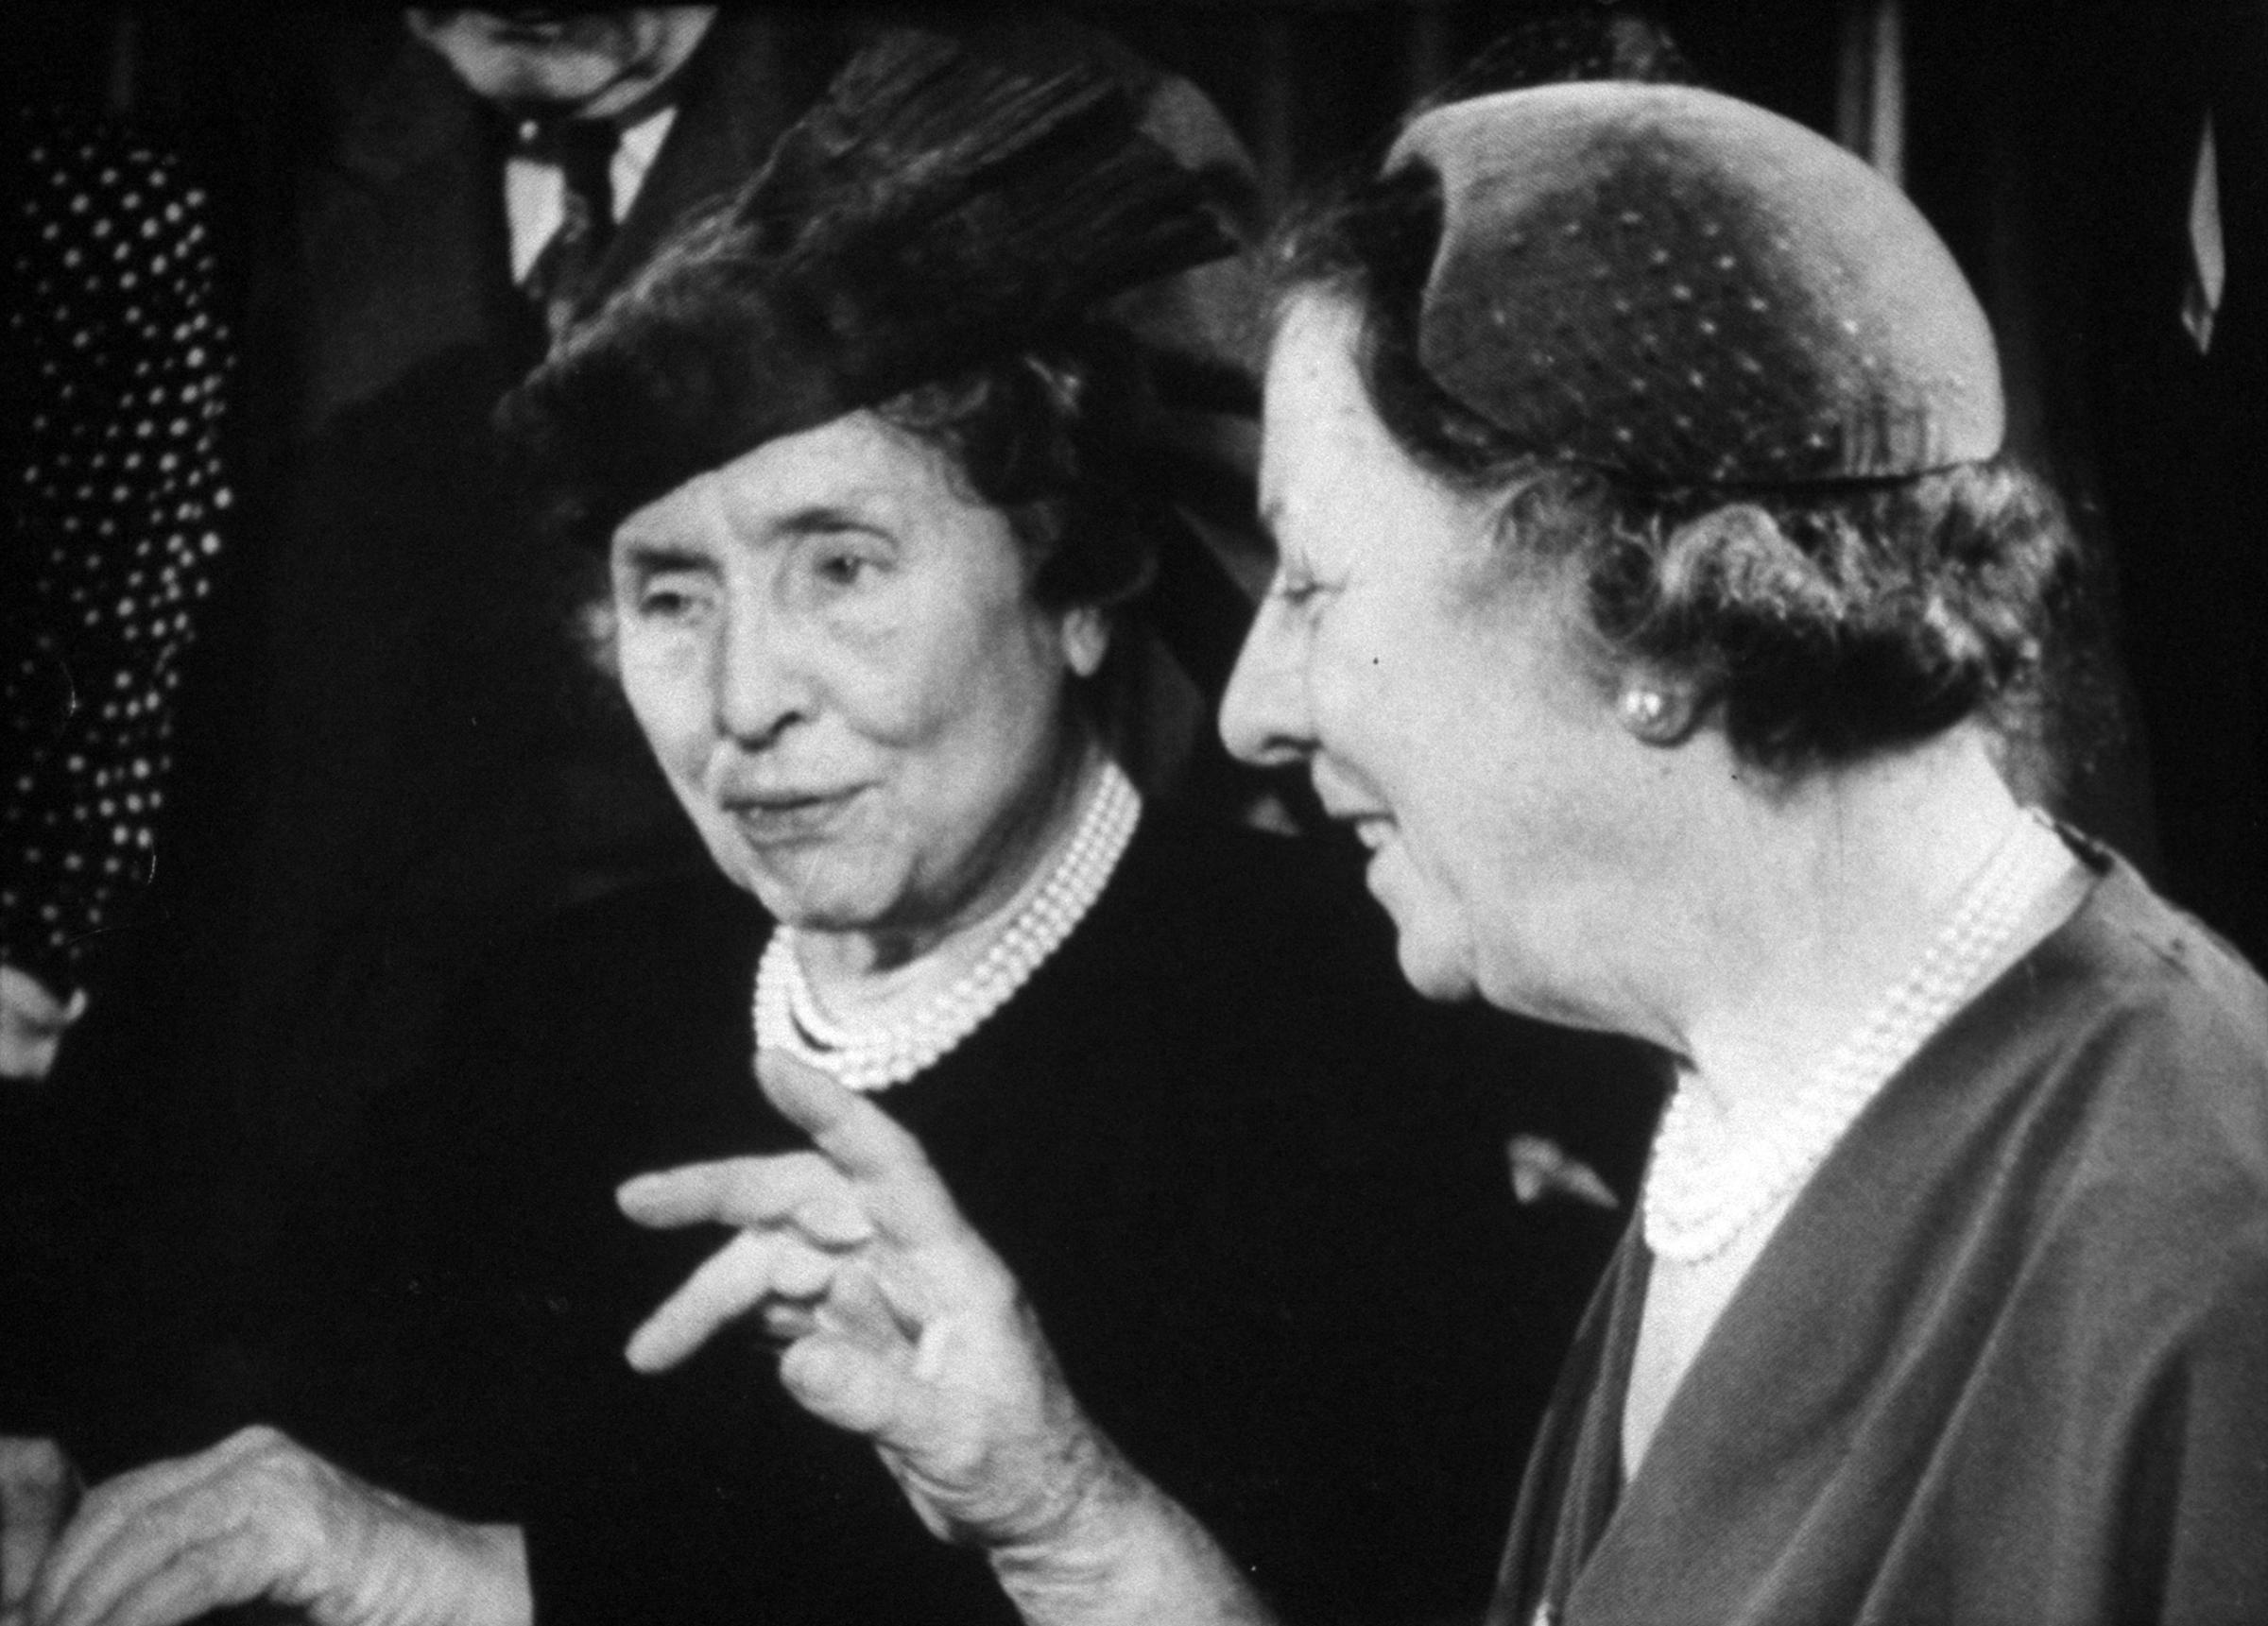 Helen Keller documentary, The Unconquered film stills from 1954.